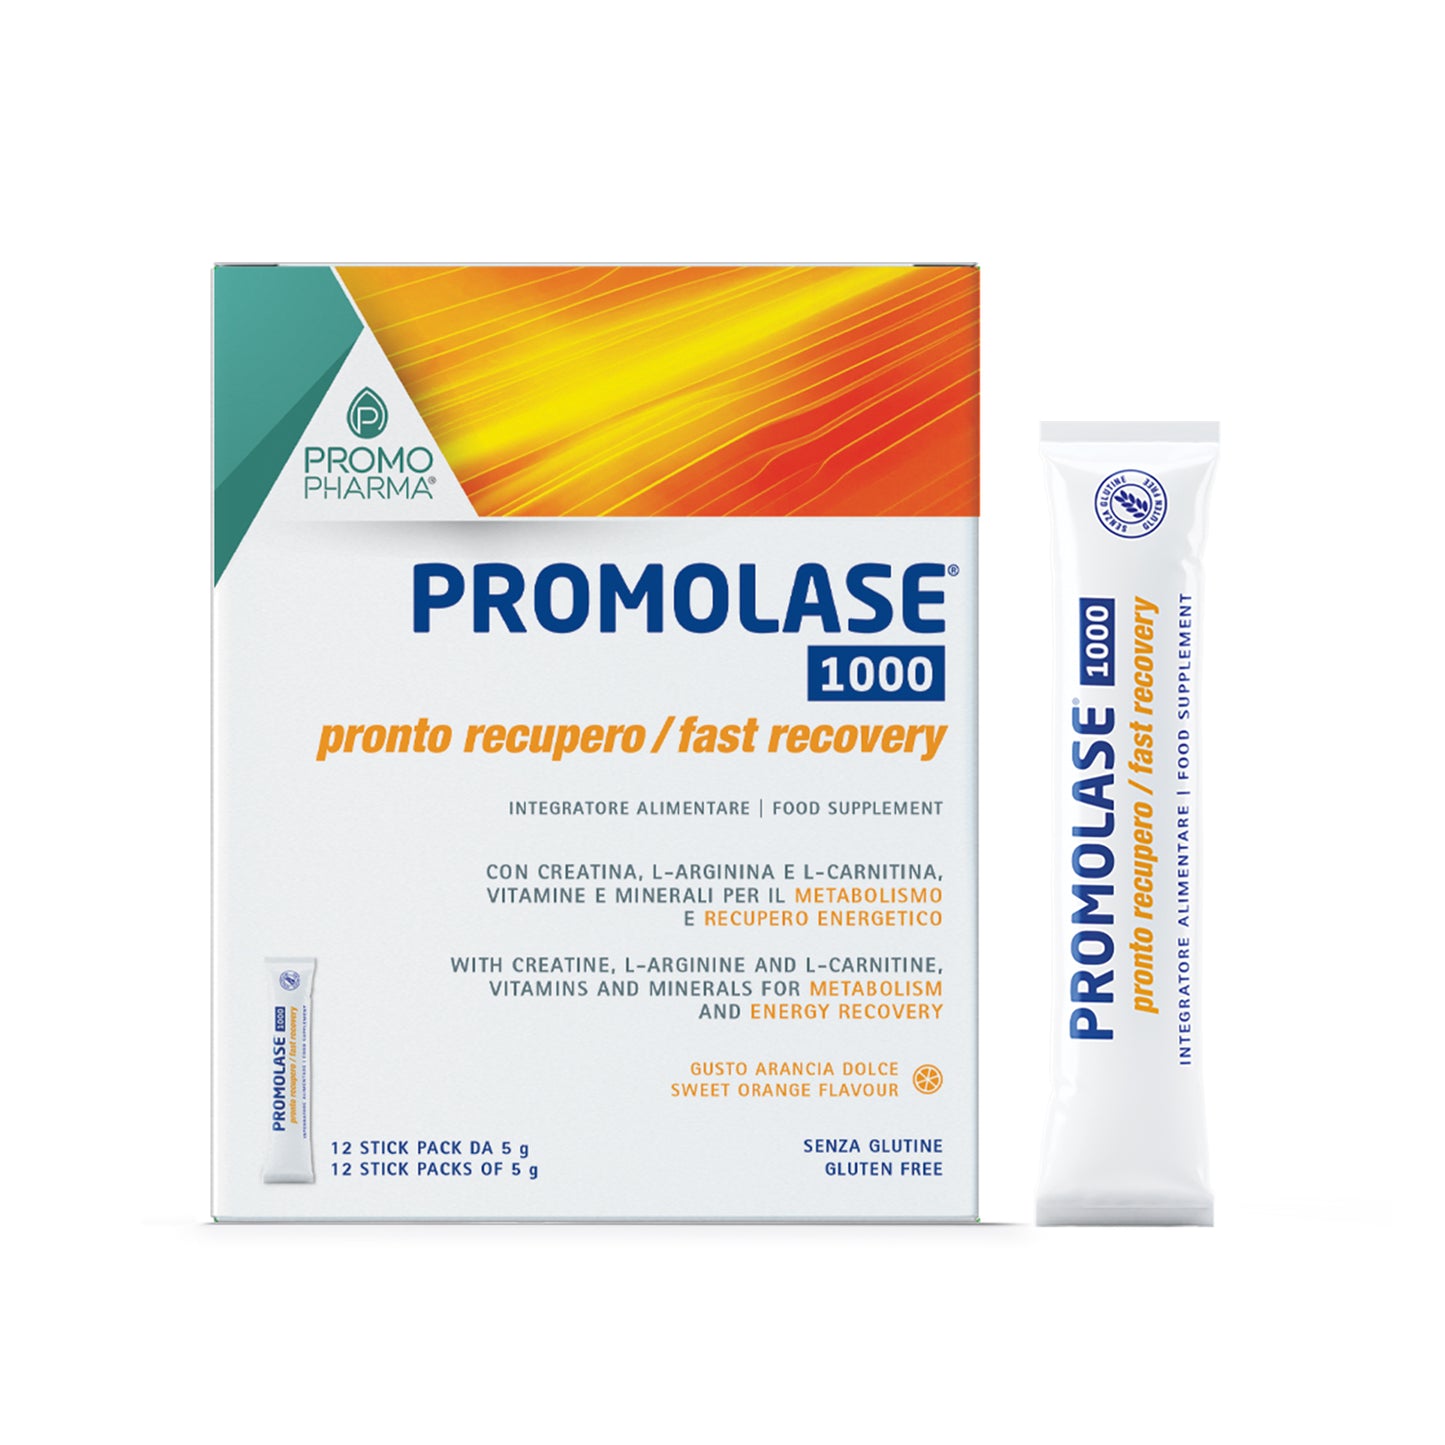 Promolase 1000® Pronto Recupero